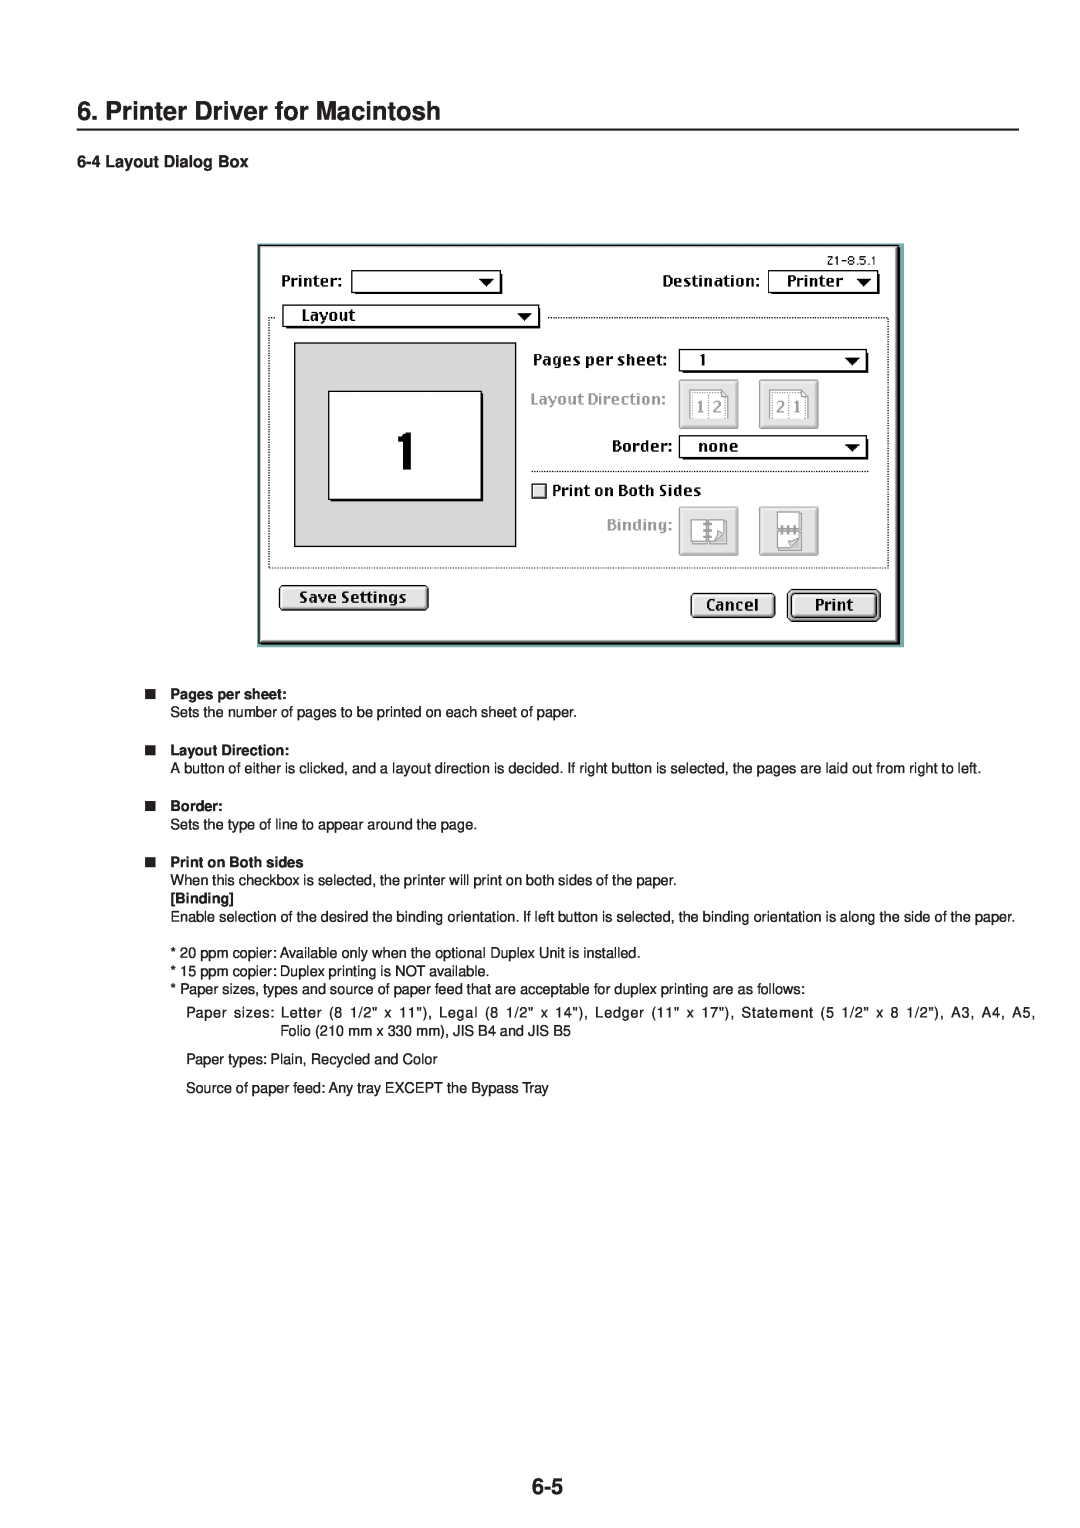 IBM Printing System Printer Driver for Macintosh, Layout Dialog Box, Pages per sheet, Layout Direction, Border, Binding 